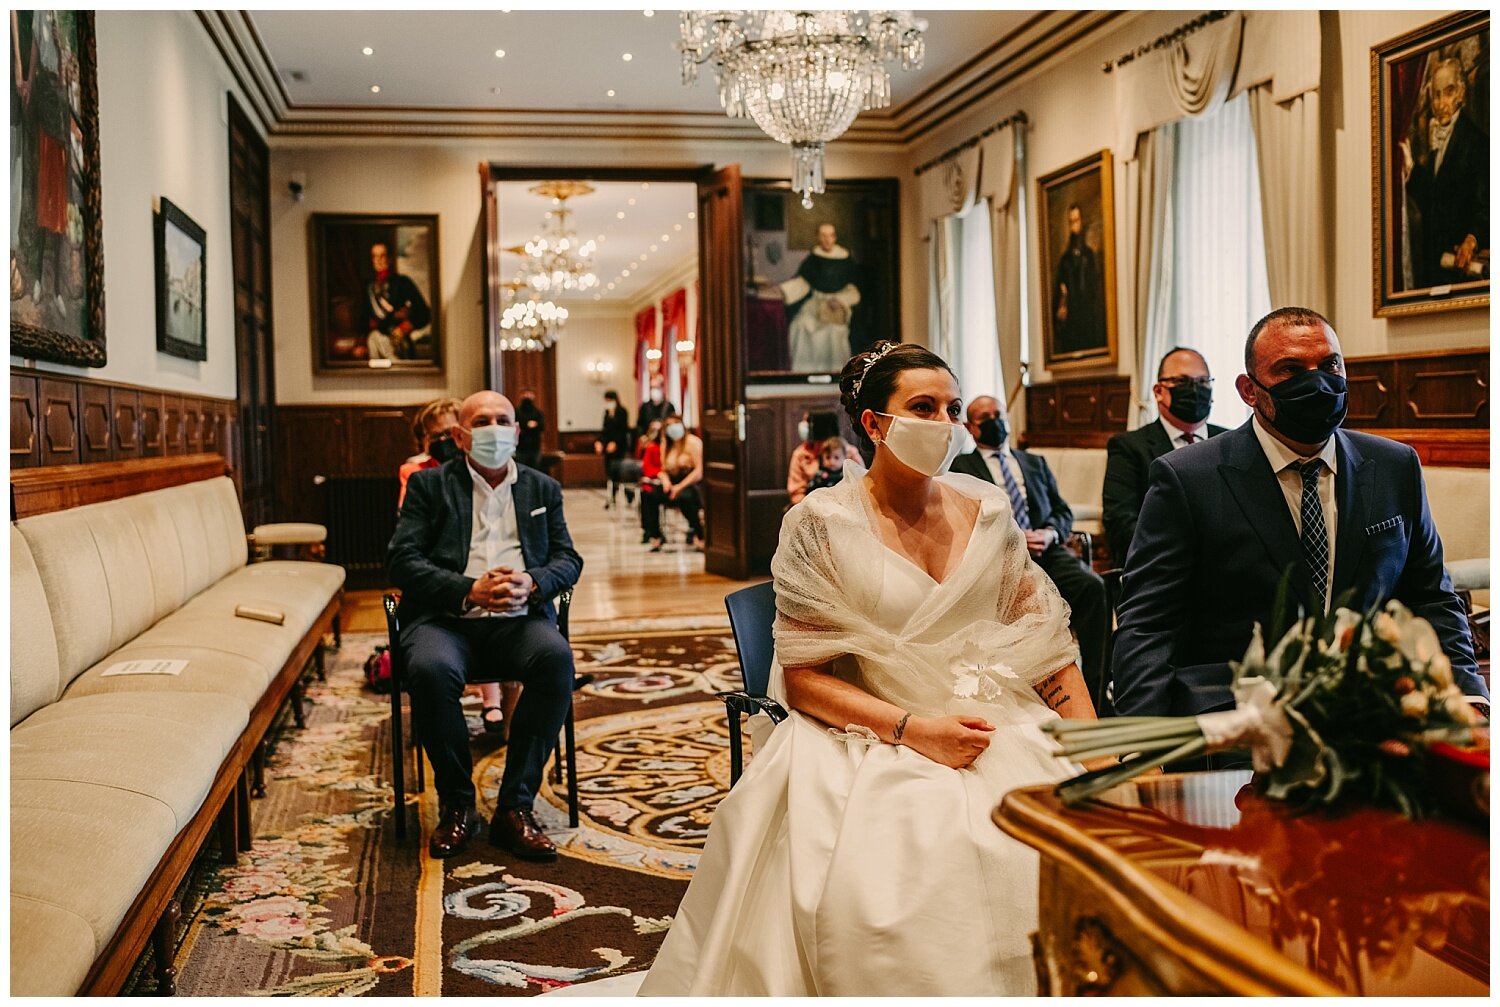 Fotografo de bodas Vitoria Boda en parador de argomaniz Boda en ayuntamiento devitoria (41).jpg